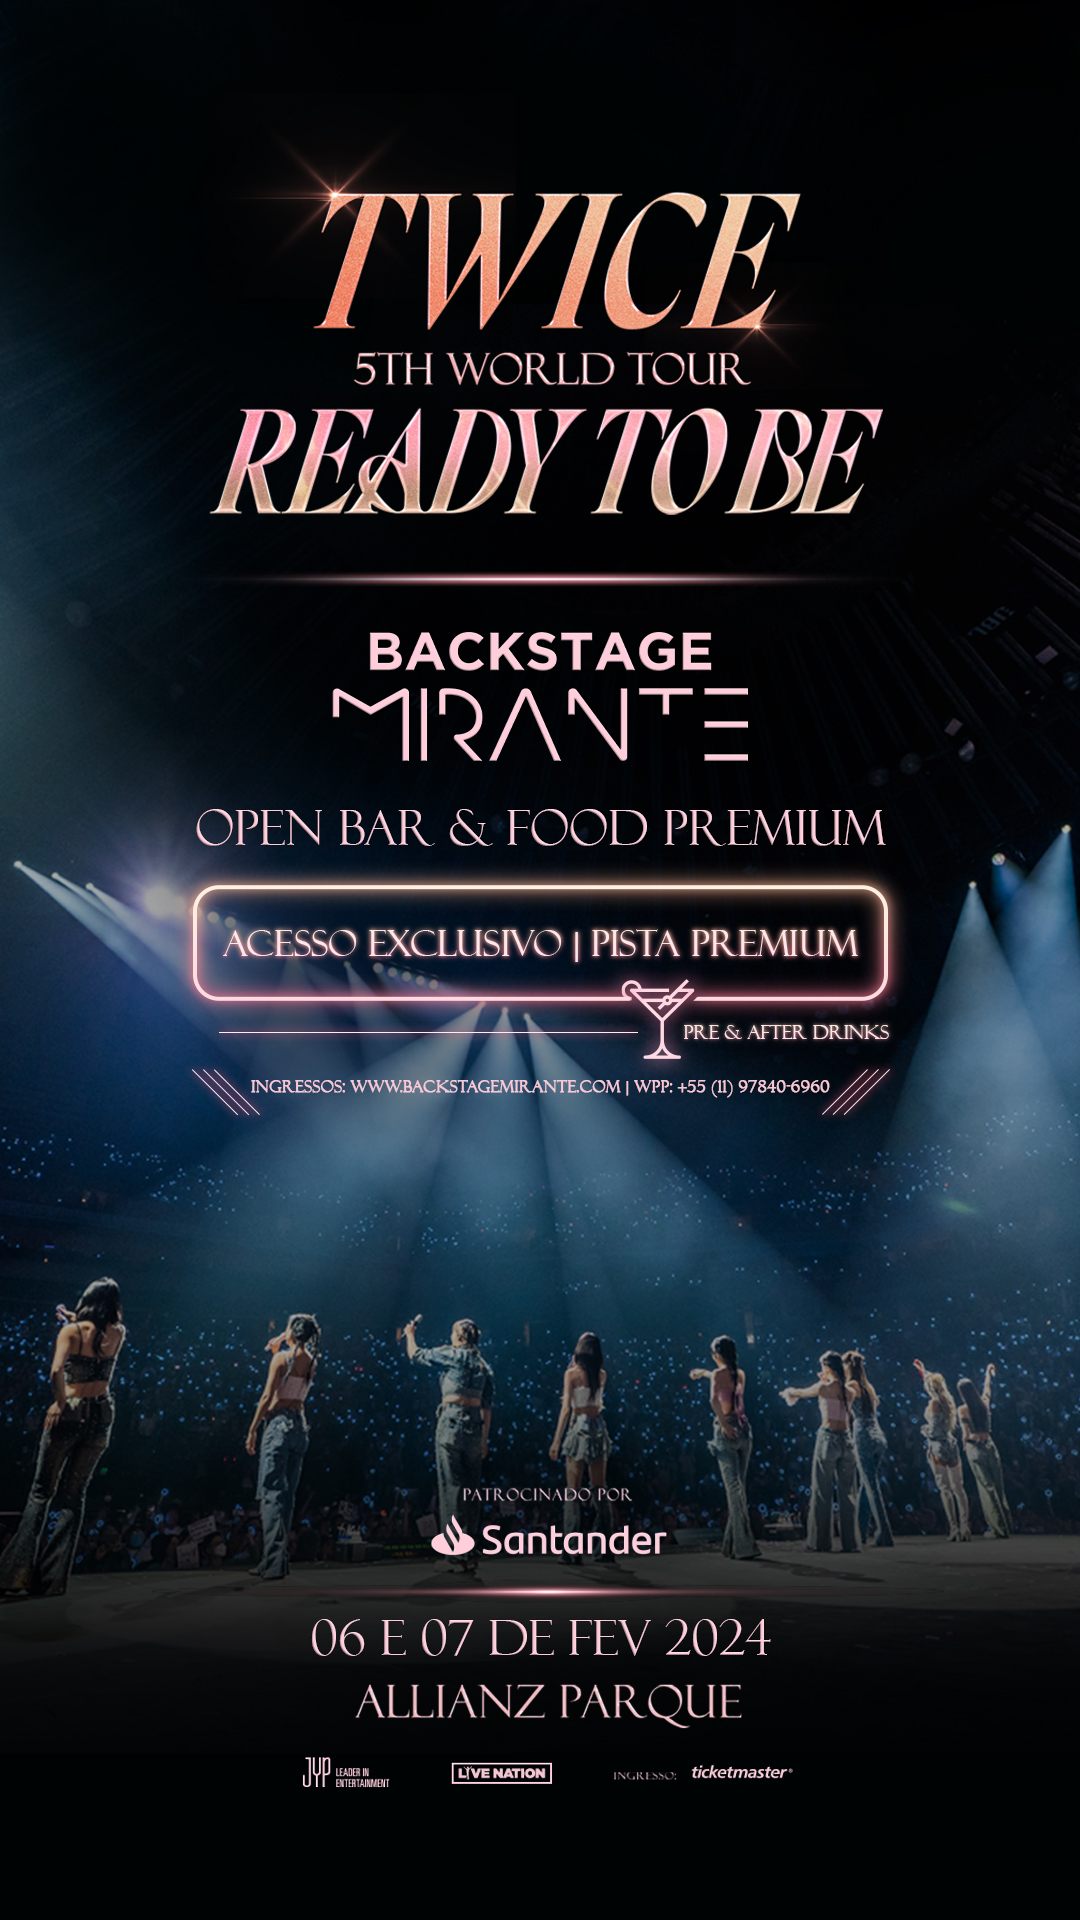 Twice Ready to be - Backstage Mirante - Allianz Parque